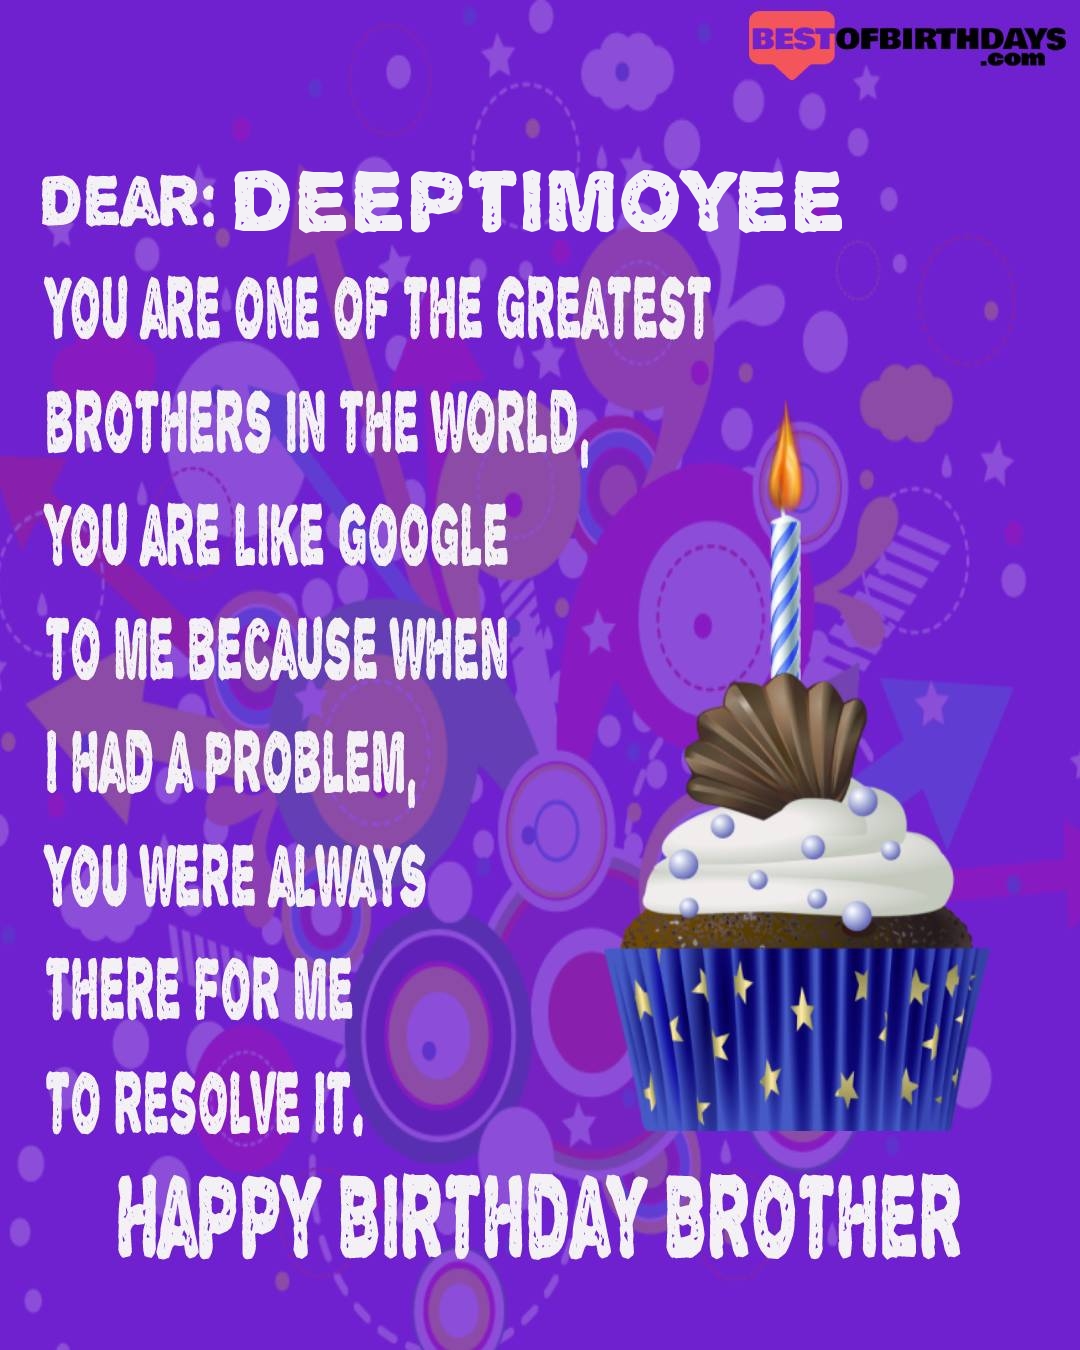 Happy birthday deeptimoyee bhai brother bro